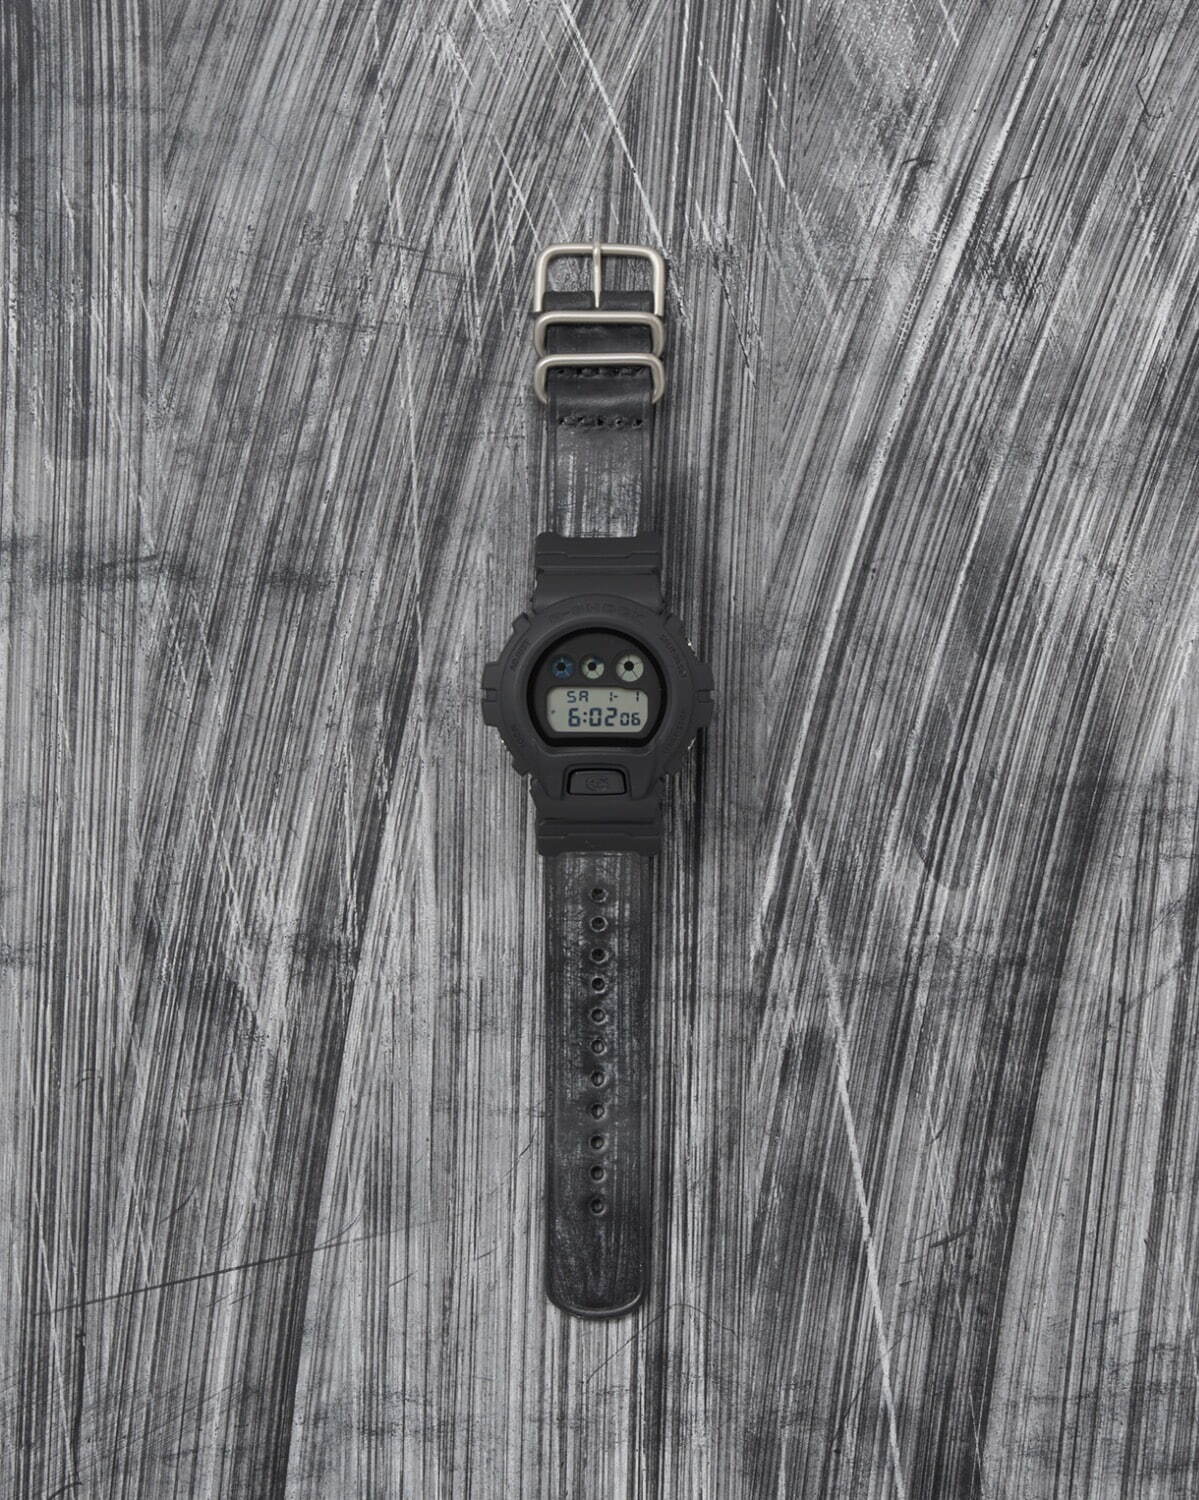 Hender Scheme G-SHOCK コラボモデル腕時計(デジタル) - 腕時計(デジタル)